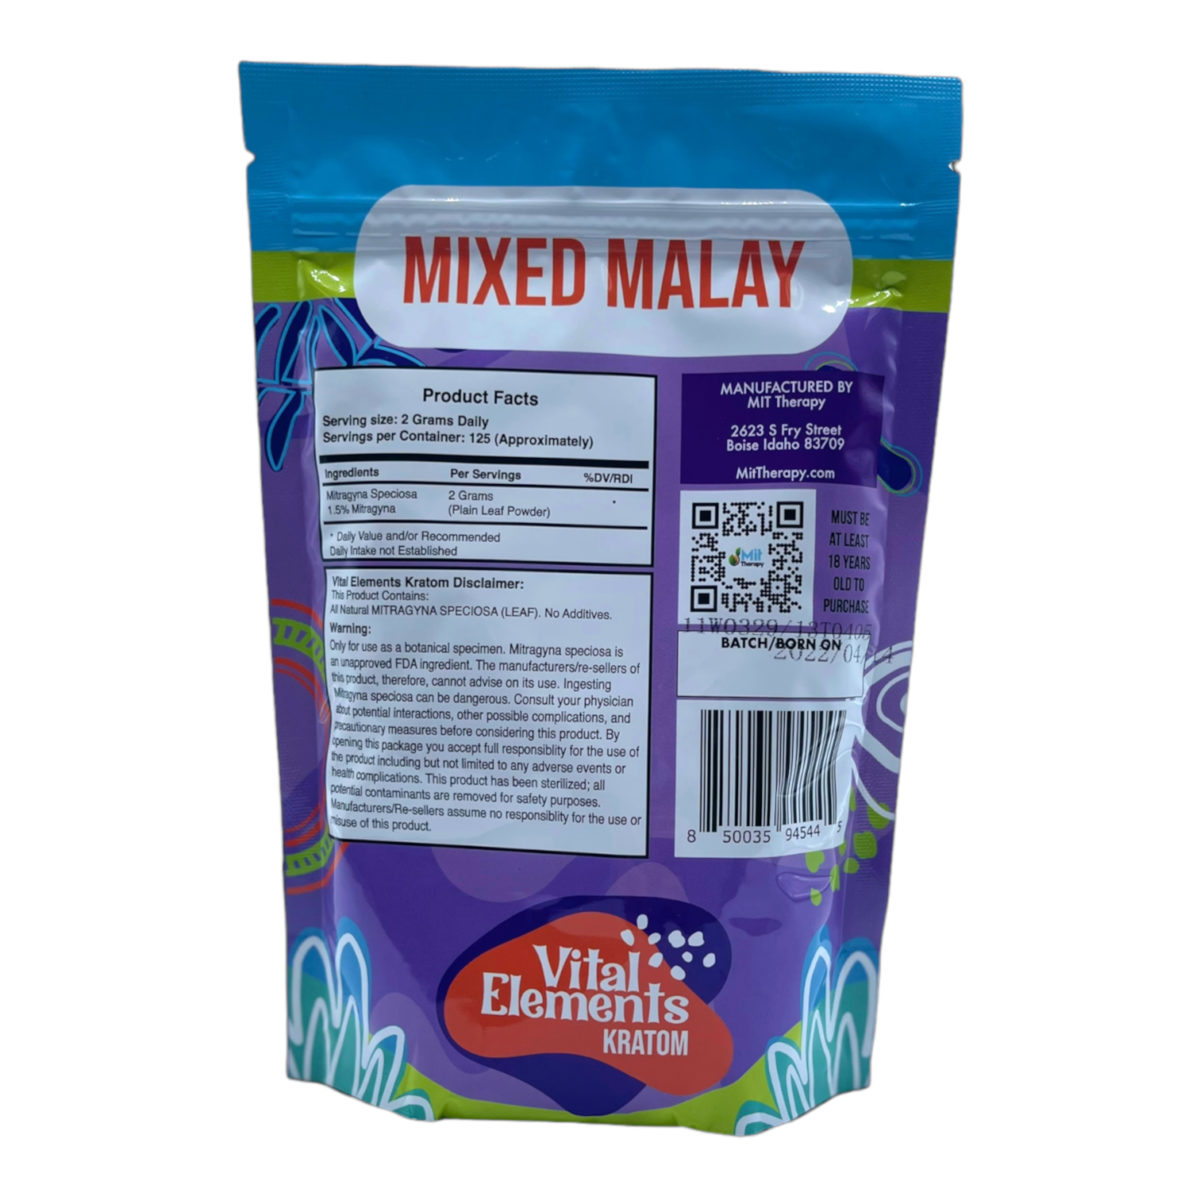 Vital Elements Mixed Malay Kratom Powder